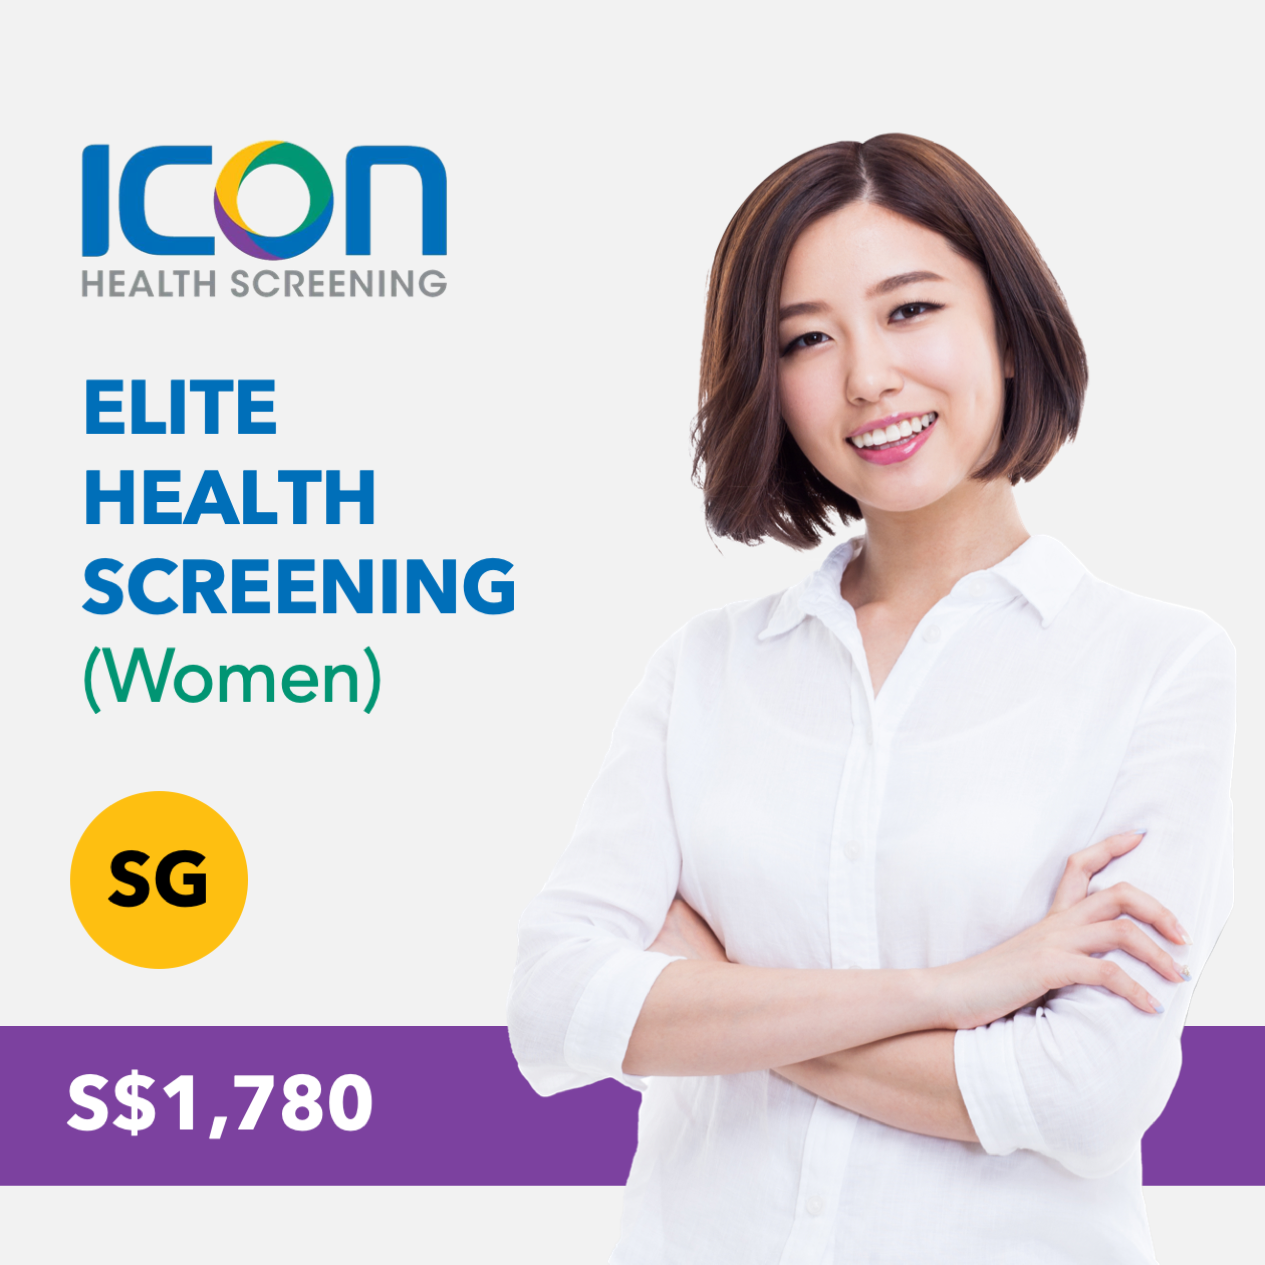 Icon Health Screening (SG) Women's Elite Health Screening